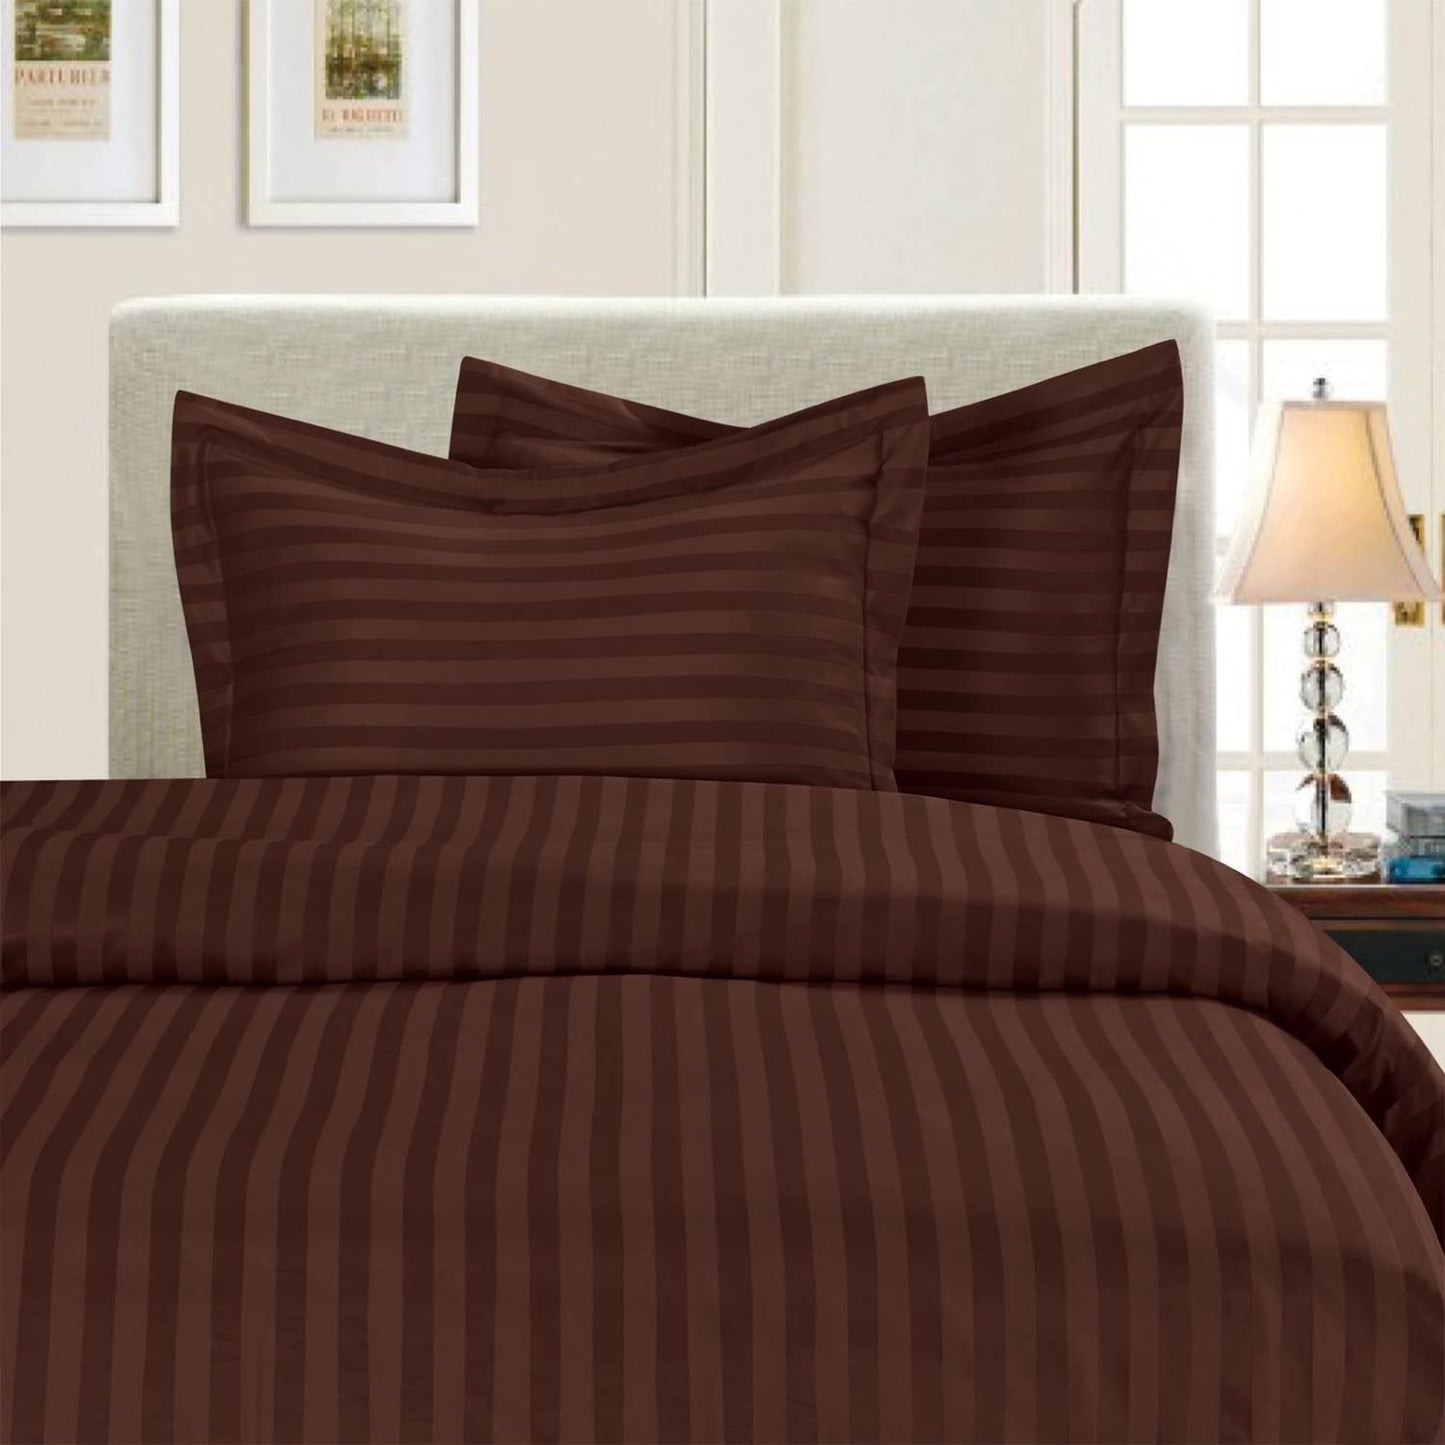 Elegant Comfort Best, Softest, 3-Piece Duvet Cover Sets! - 1500 Thread Count Egyptian Quality Luxurious Wrinkle Resistant 3-Piece Damask Stripe Duvet Cover Set